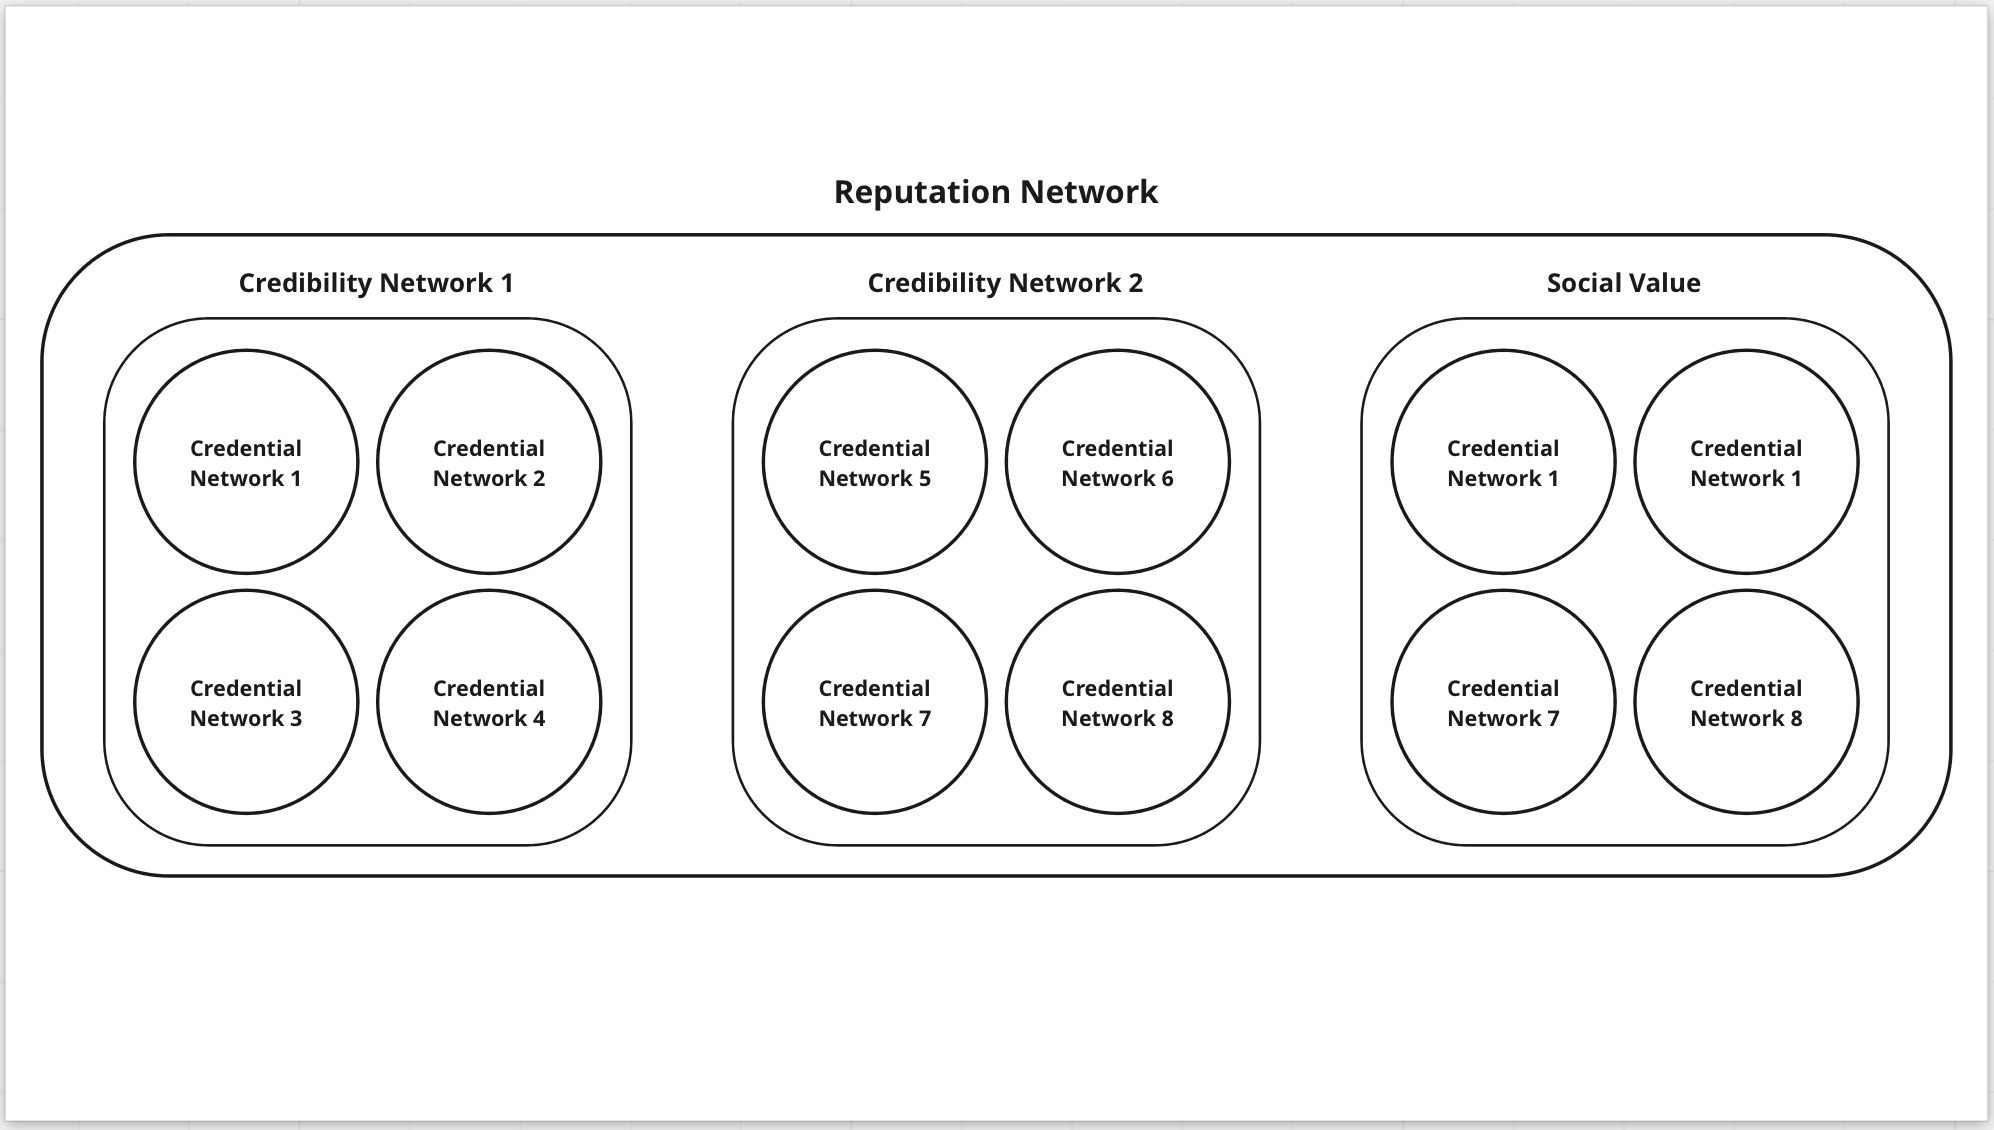 Fig. 4 Reputation Network